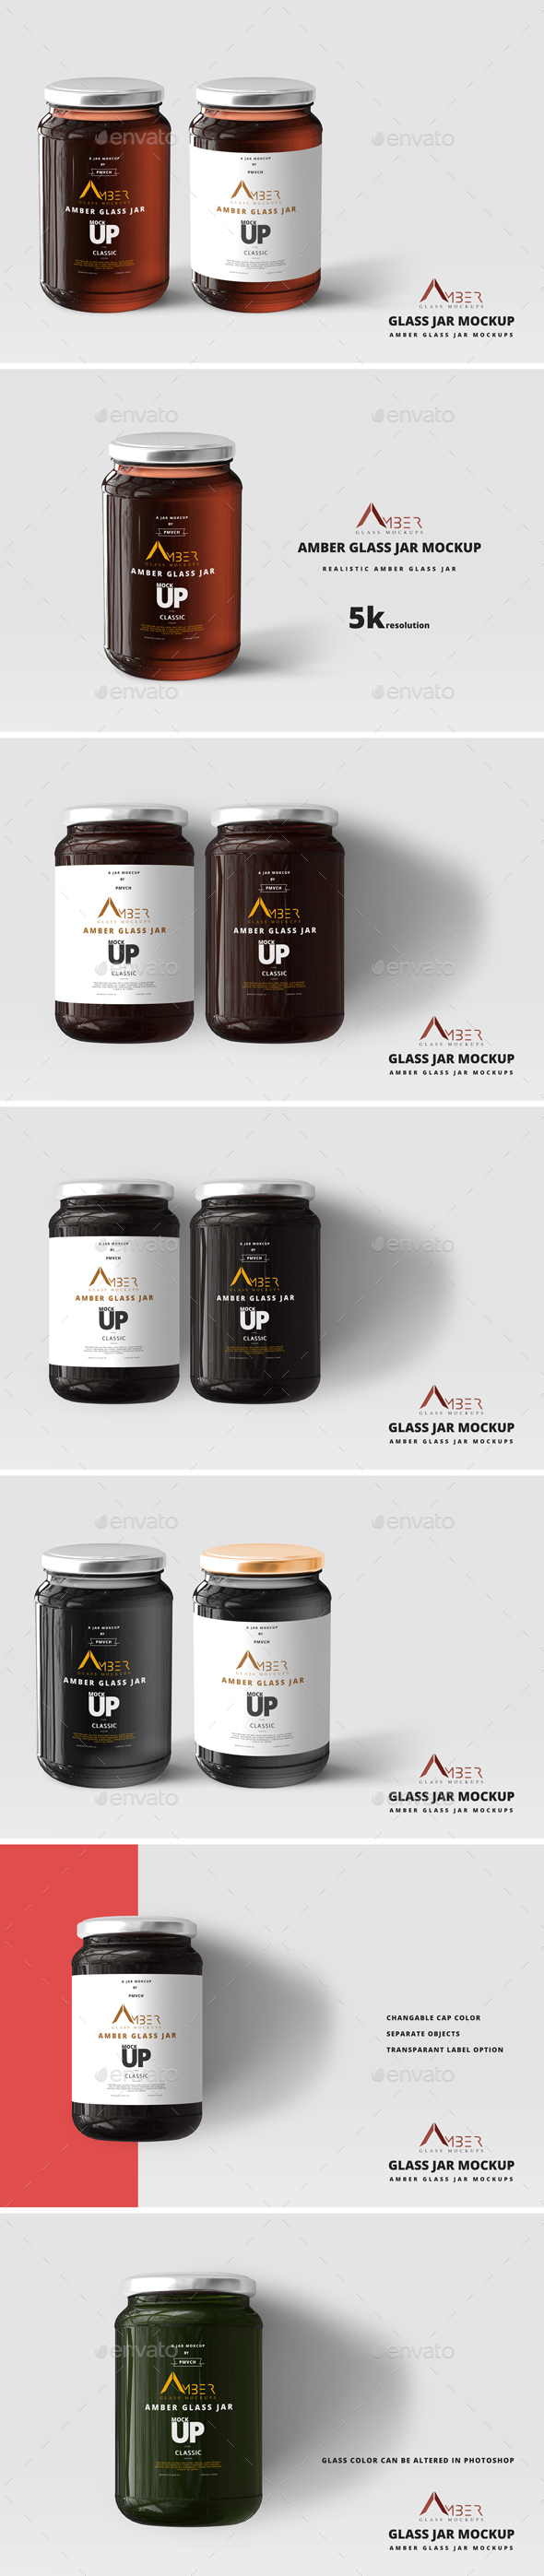 Amber Glass Jar Mockup By Deltatemplates Graphicriver